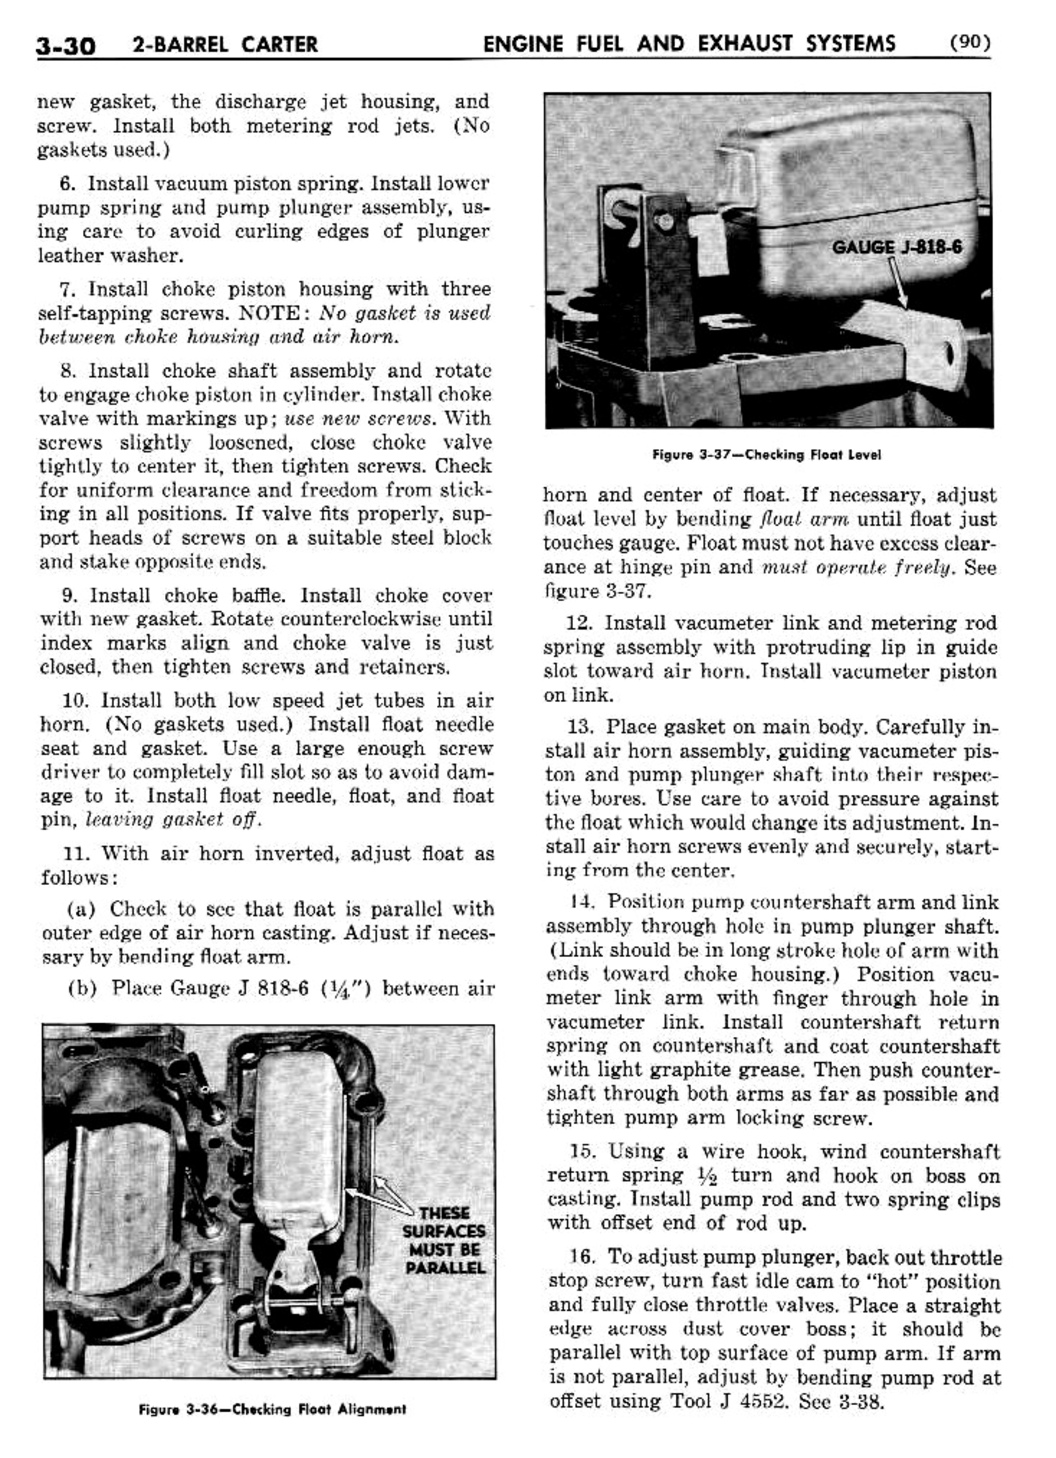 n_04 1956 Buick Shop Manual - Engine Fuel & Exhaust-030-030.jpg